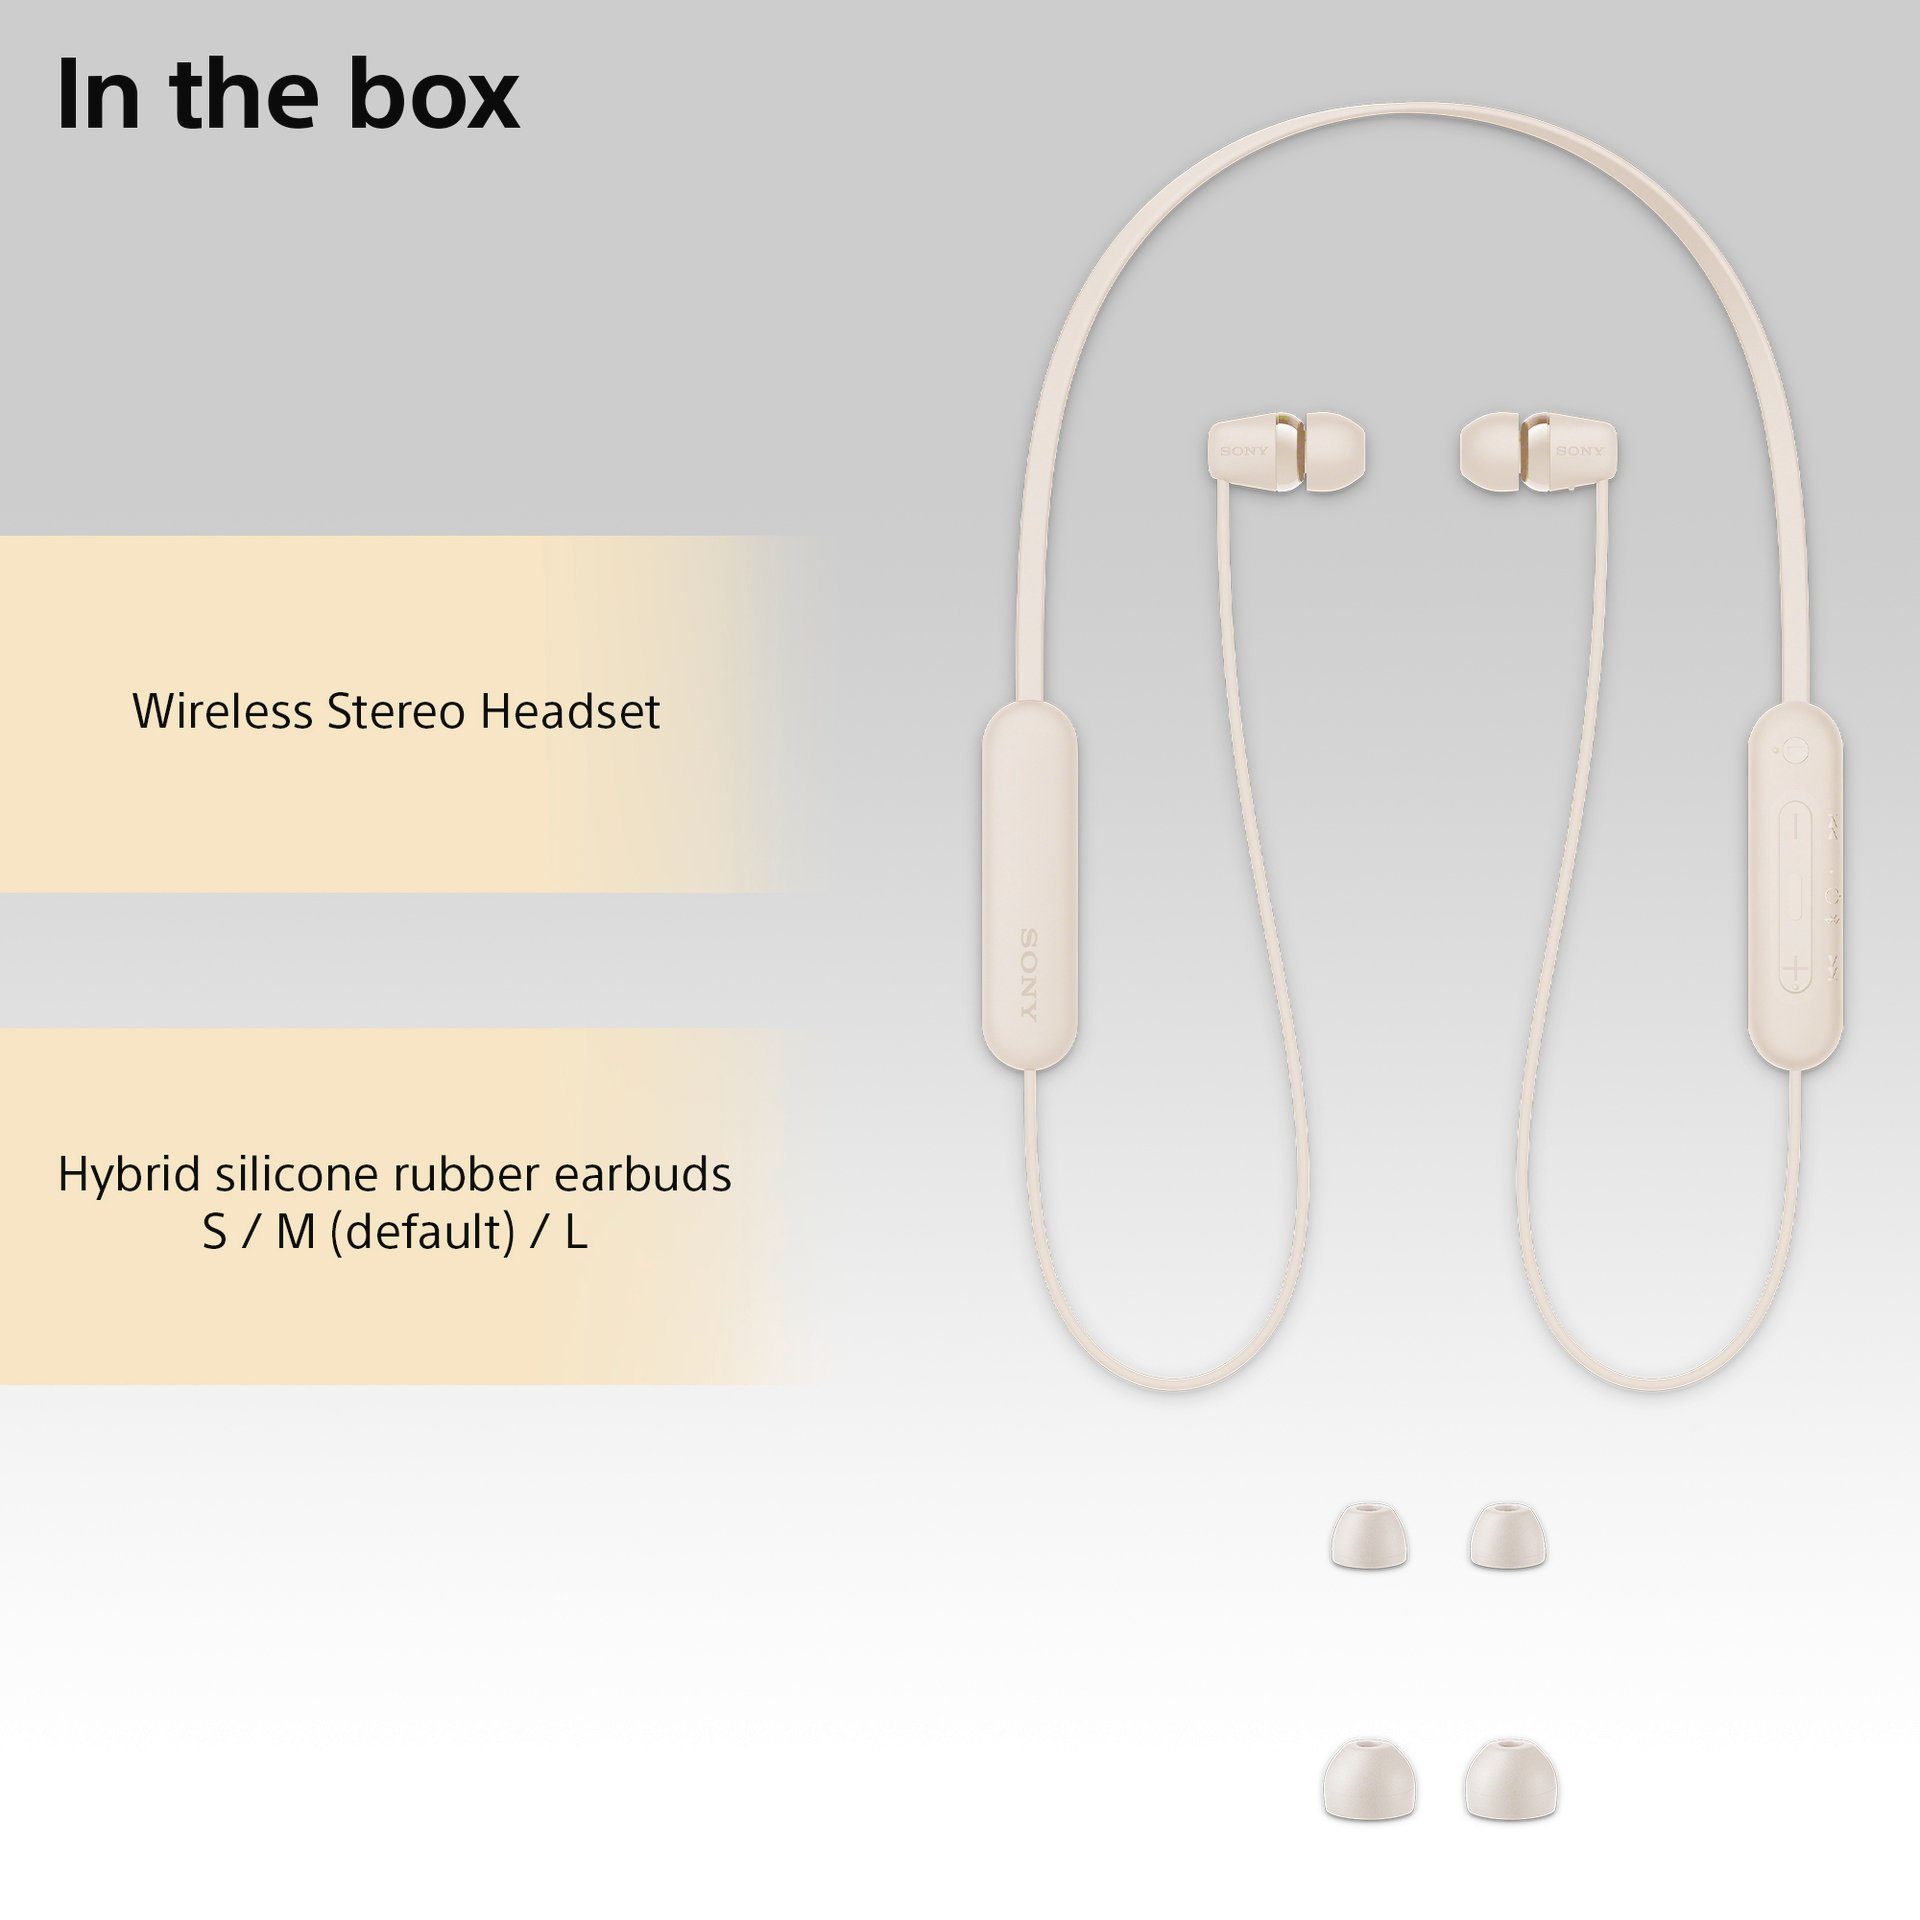 Sony In-Ear Kopfhörer WI-C100 (Sprachsteuerung) In-Ear-Kopfhörer beige